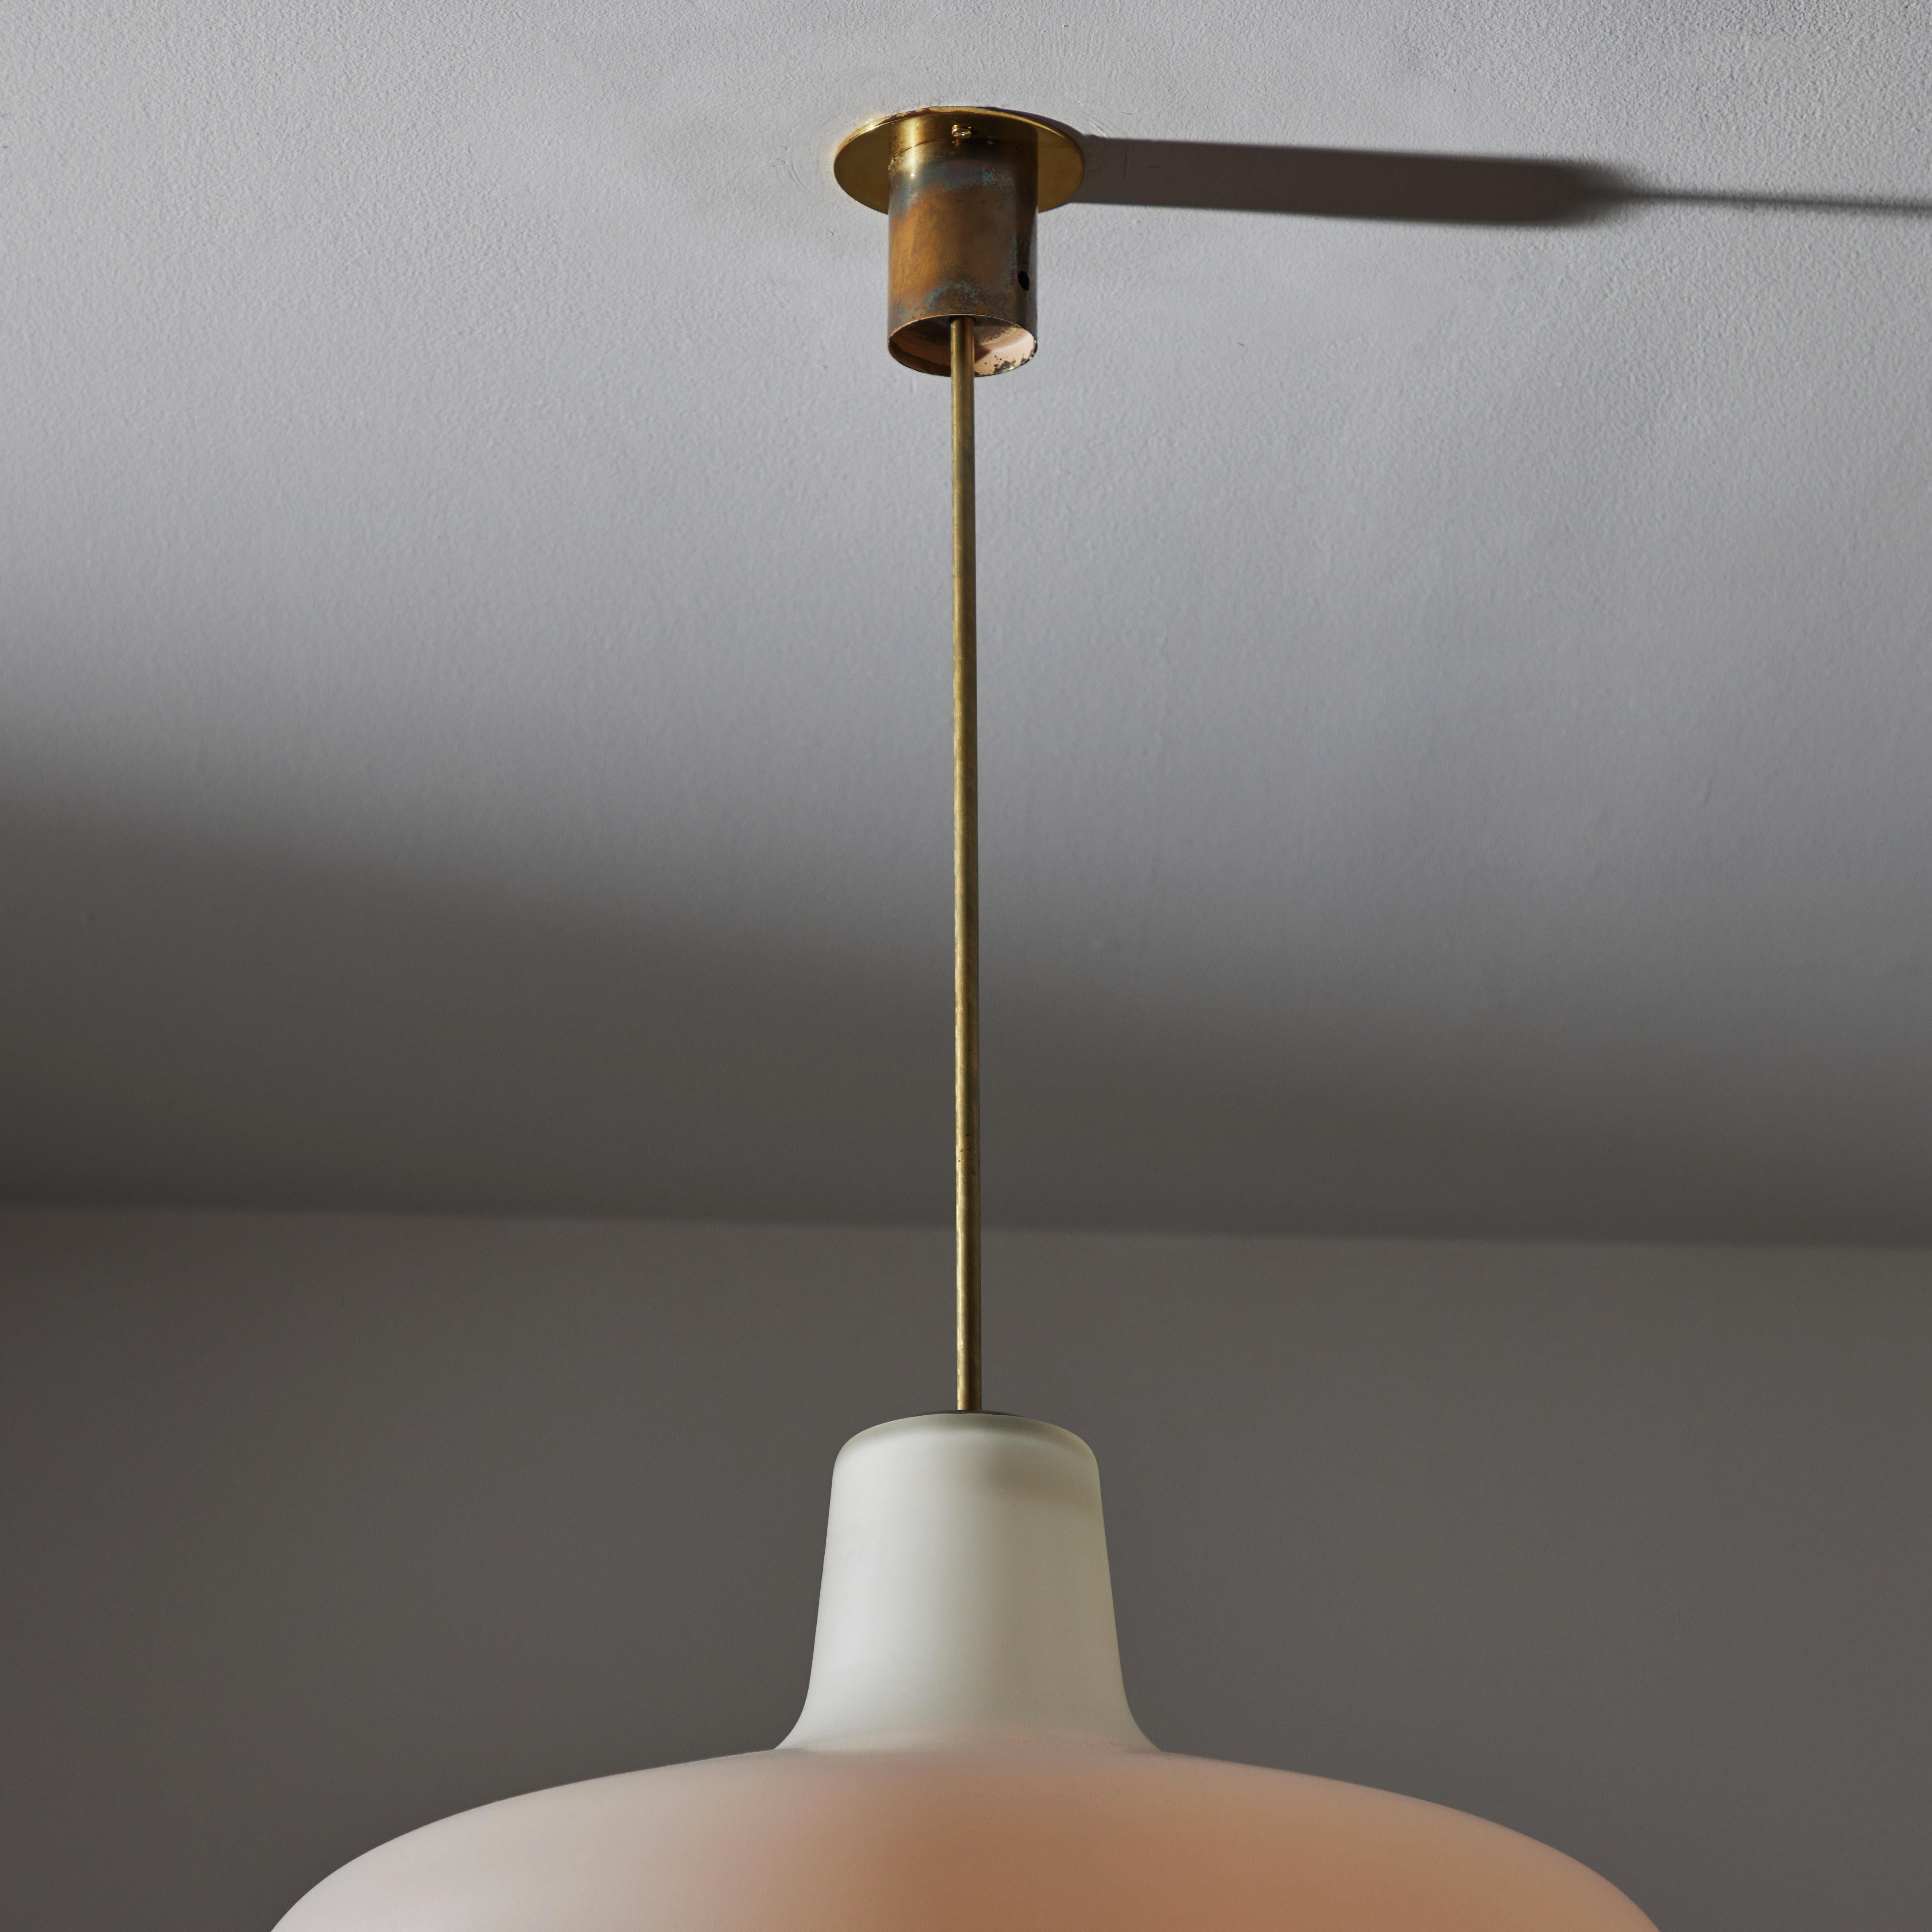 Brass Model LS7 “Paolina” Ceiling Light by Ignazio Gardella for Azucena